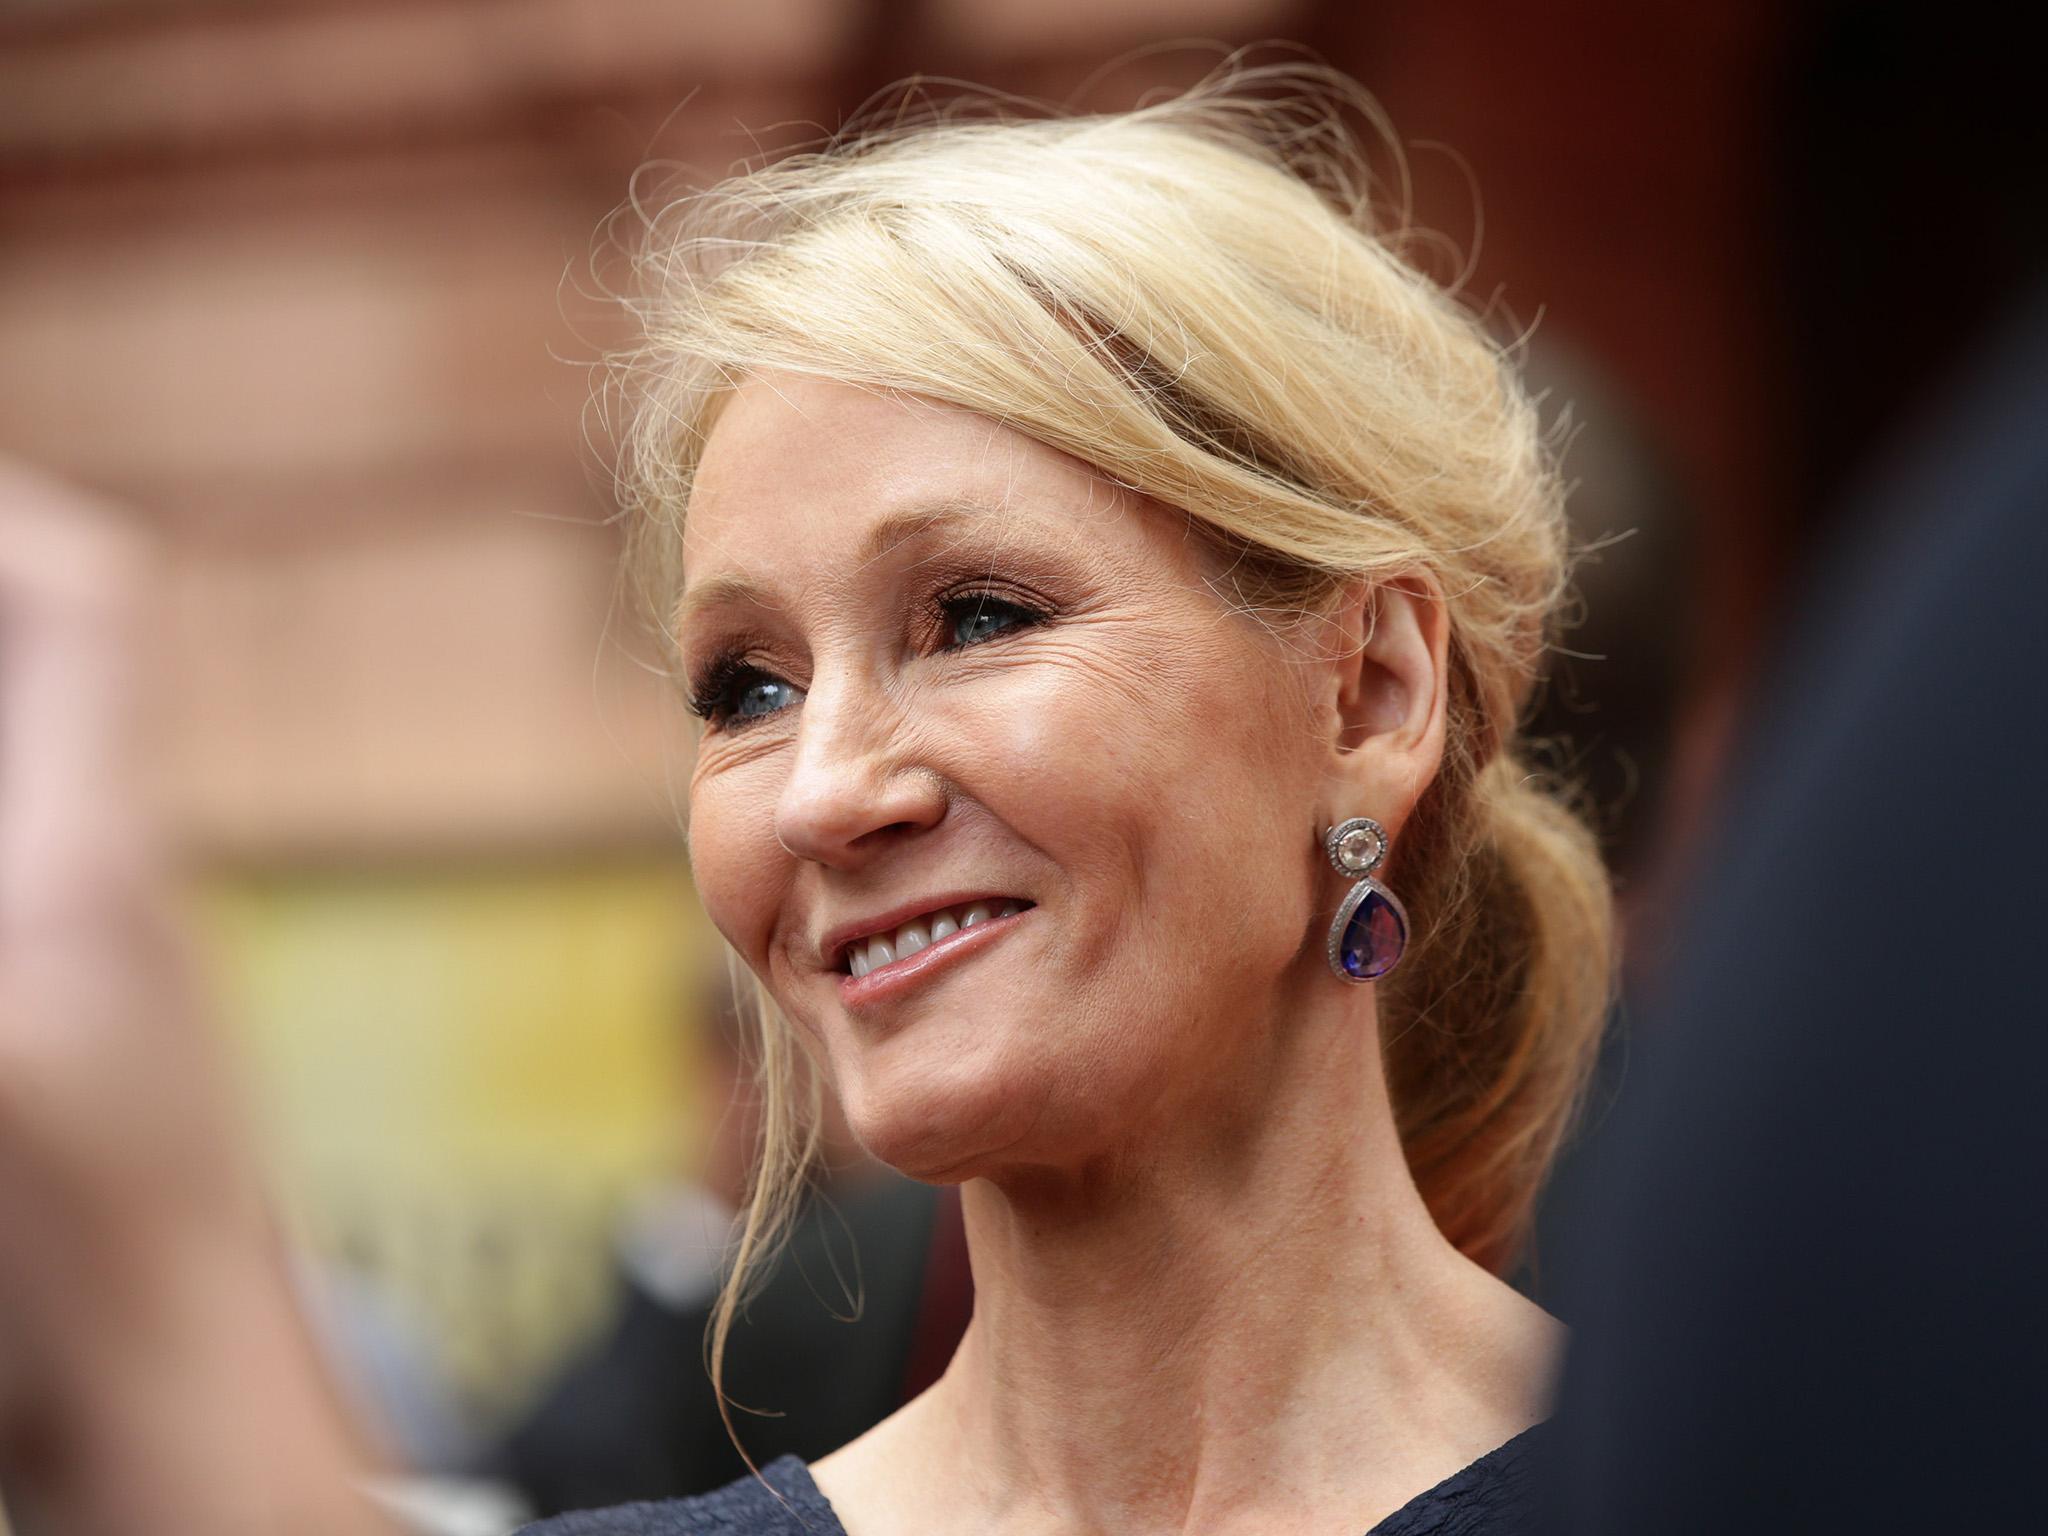 JK Rowling reveals secret manuscript scrawled onto a party dress